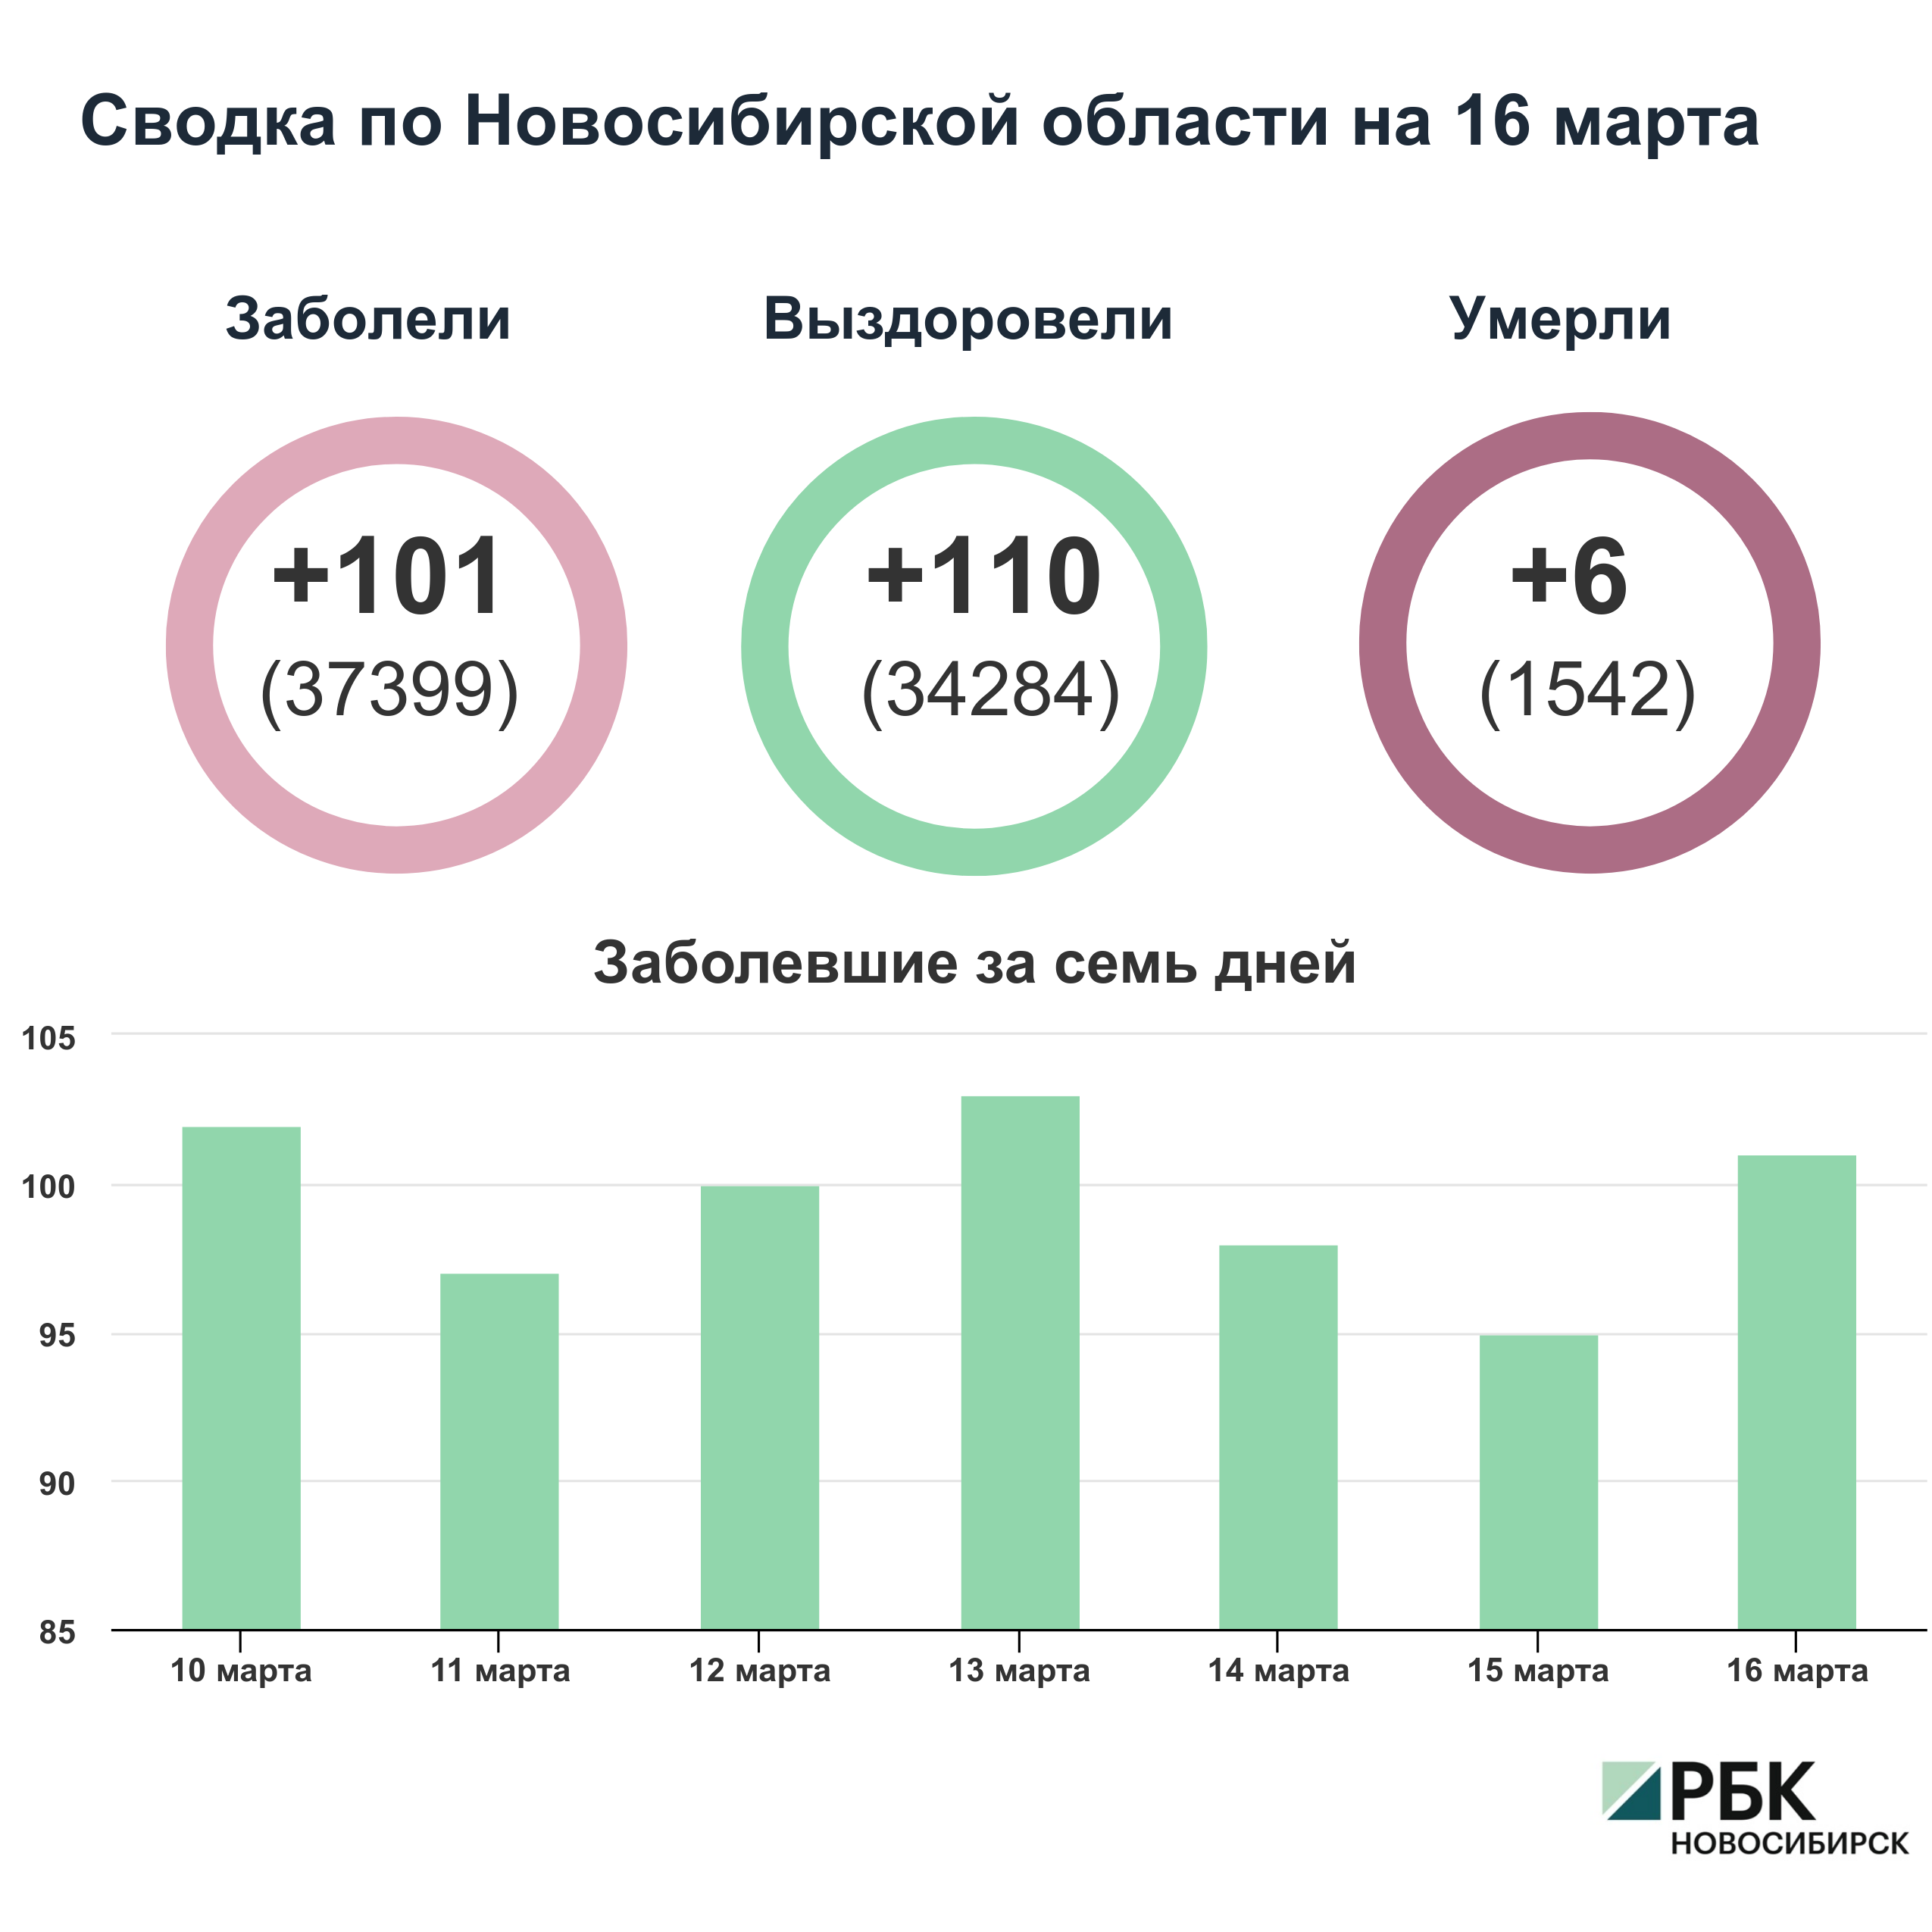 Коронавирус в Новосибирске: сводка на 16 марта